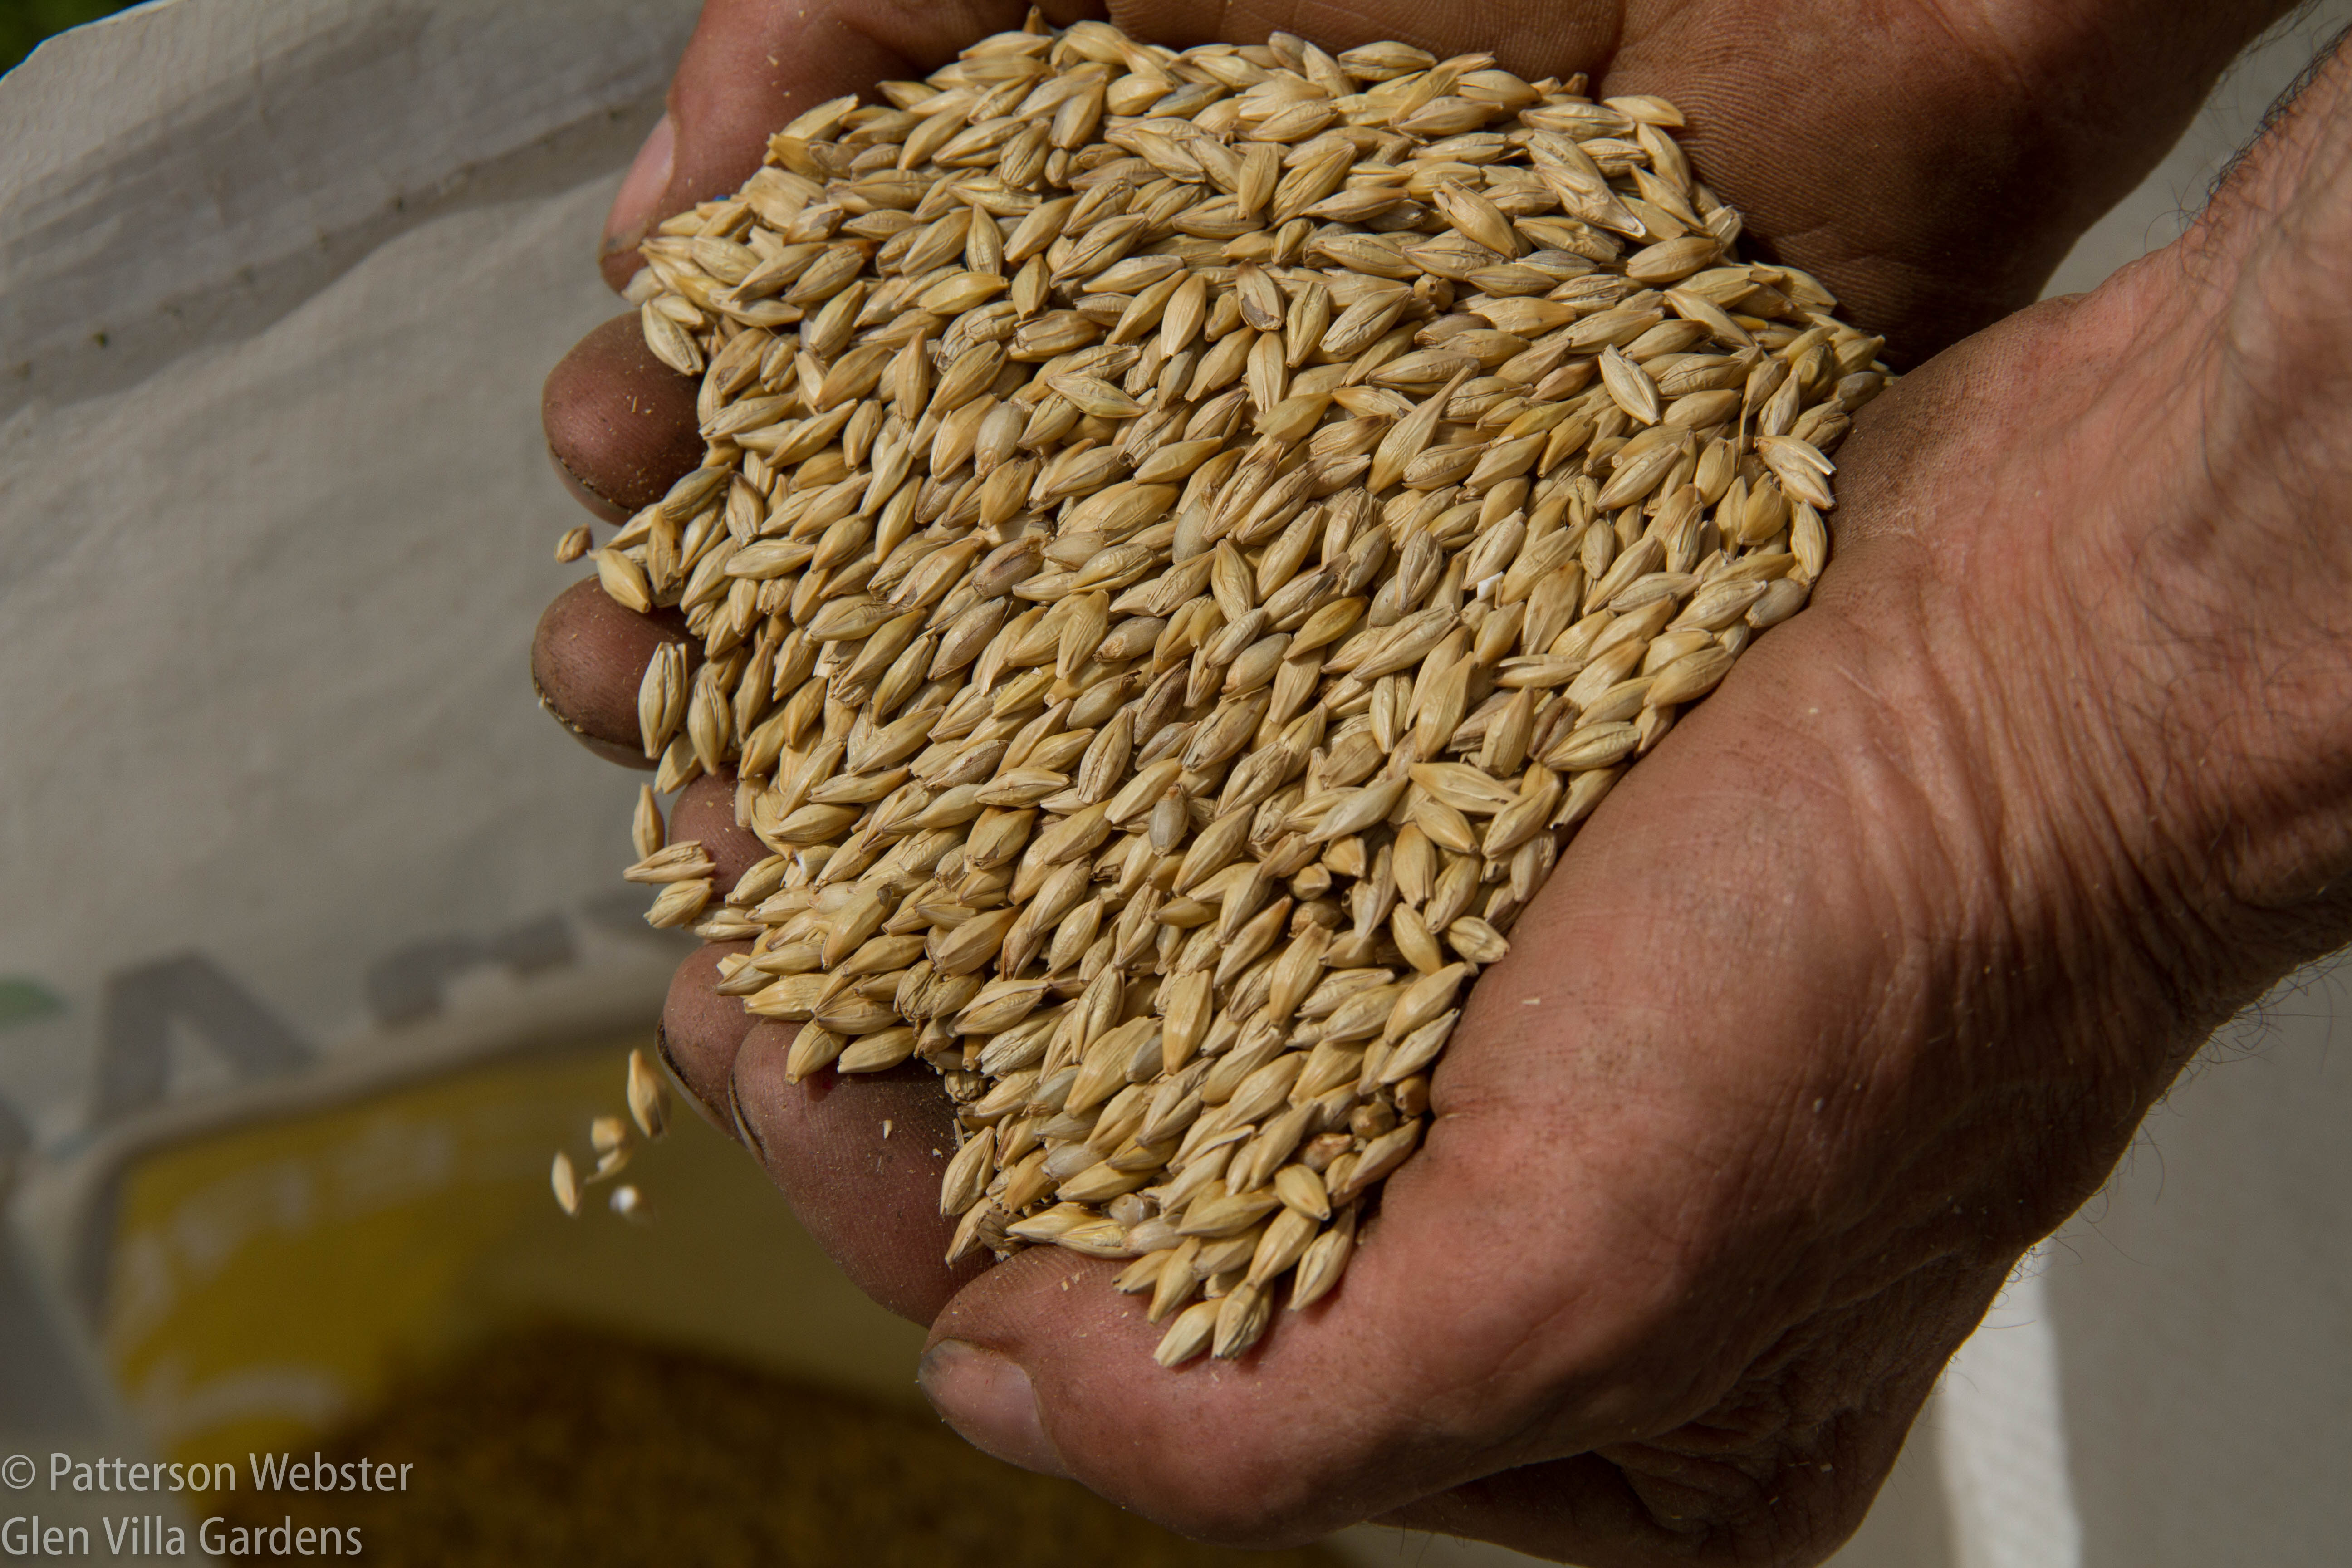 Barley or flax?